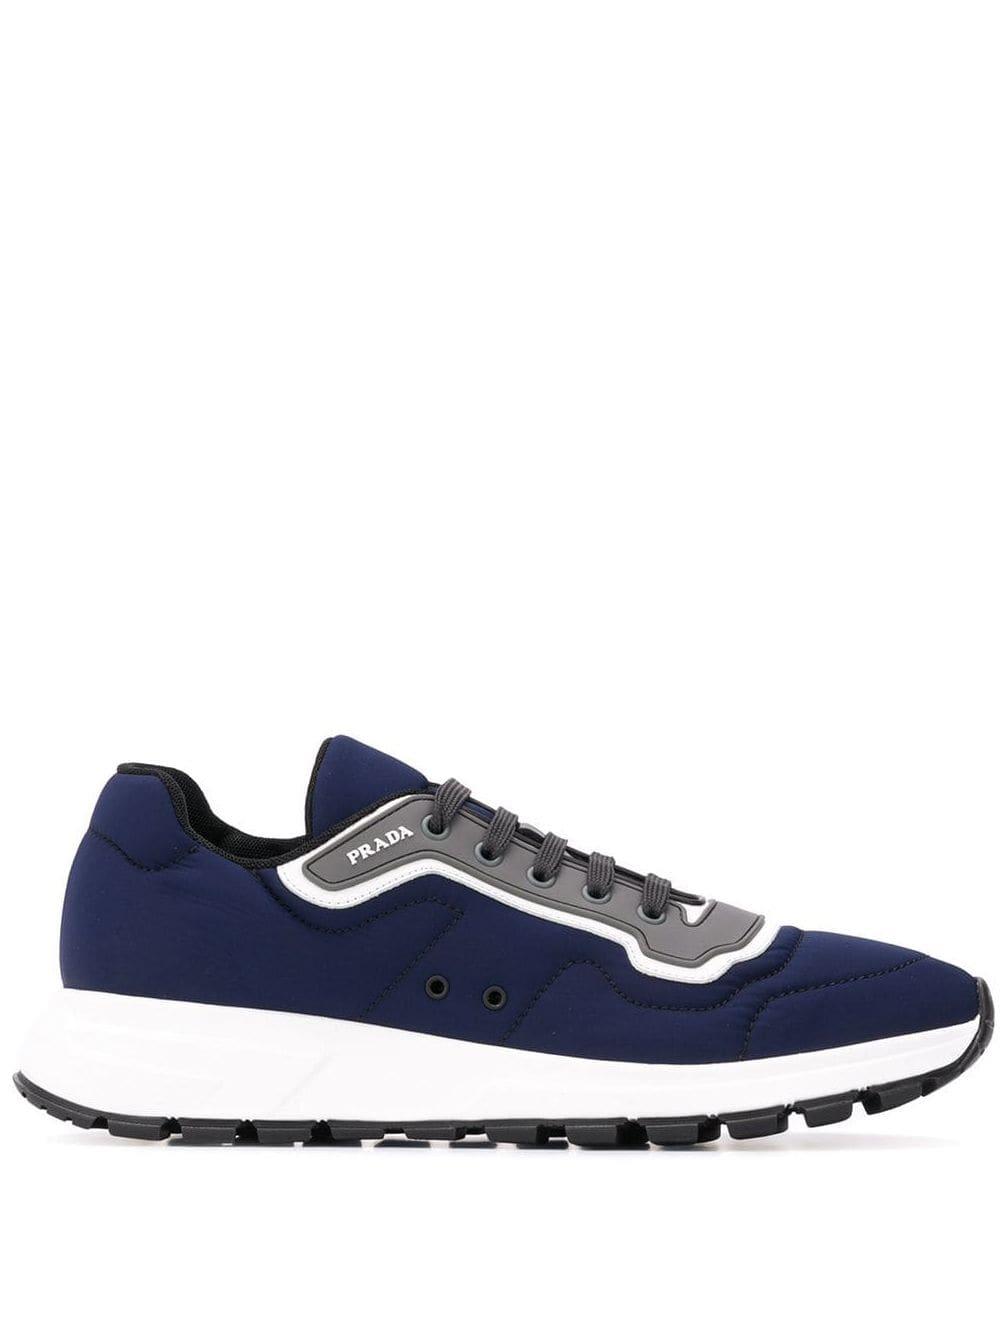 Prada Leather Low Top Logo Sneakers in Blue for Men - Lyst